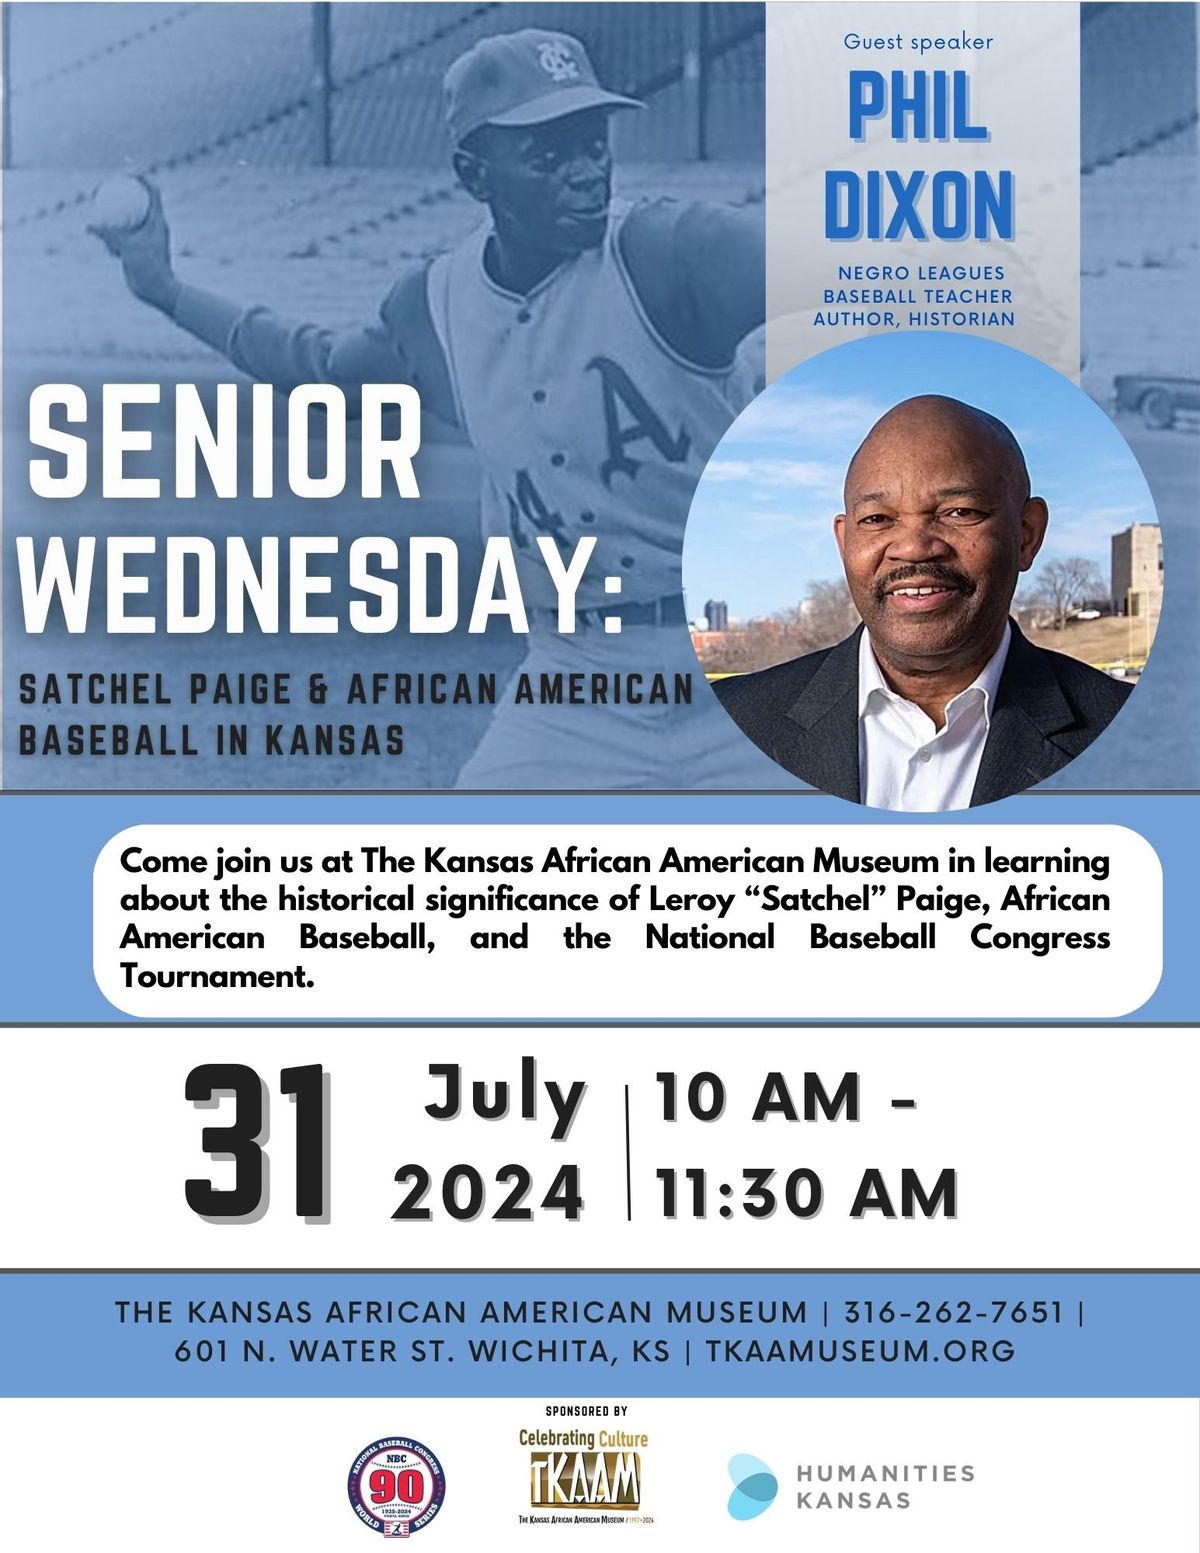 Senior Wednesday: Negro League Author Phil S. Dixon Presentation